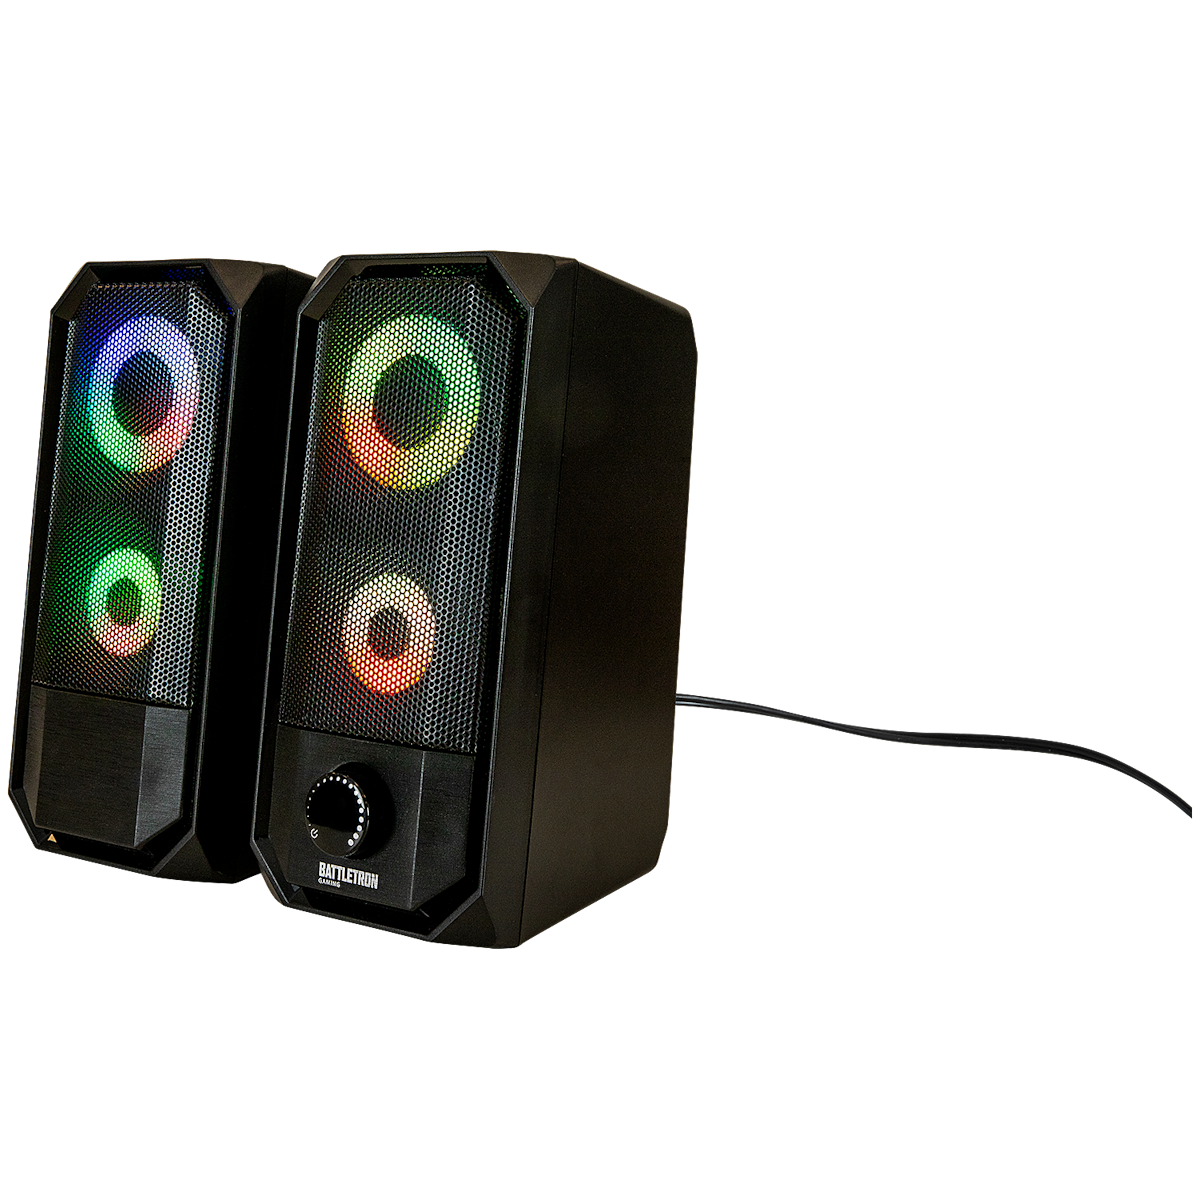 Battletron gaming speakers met licht